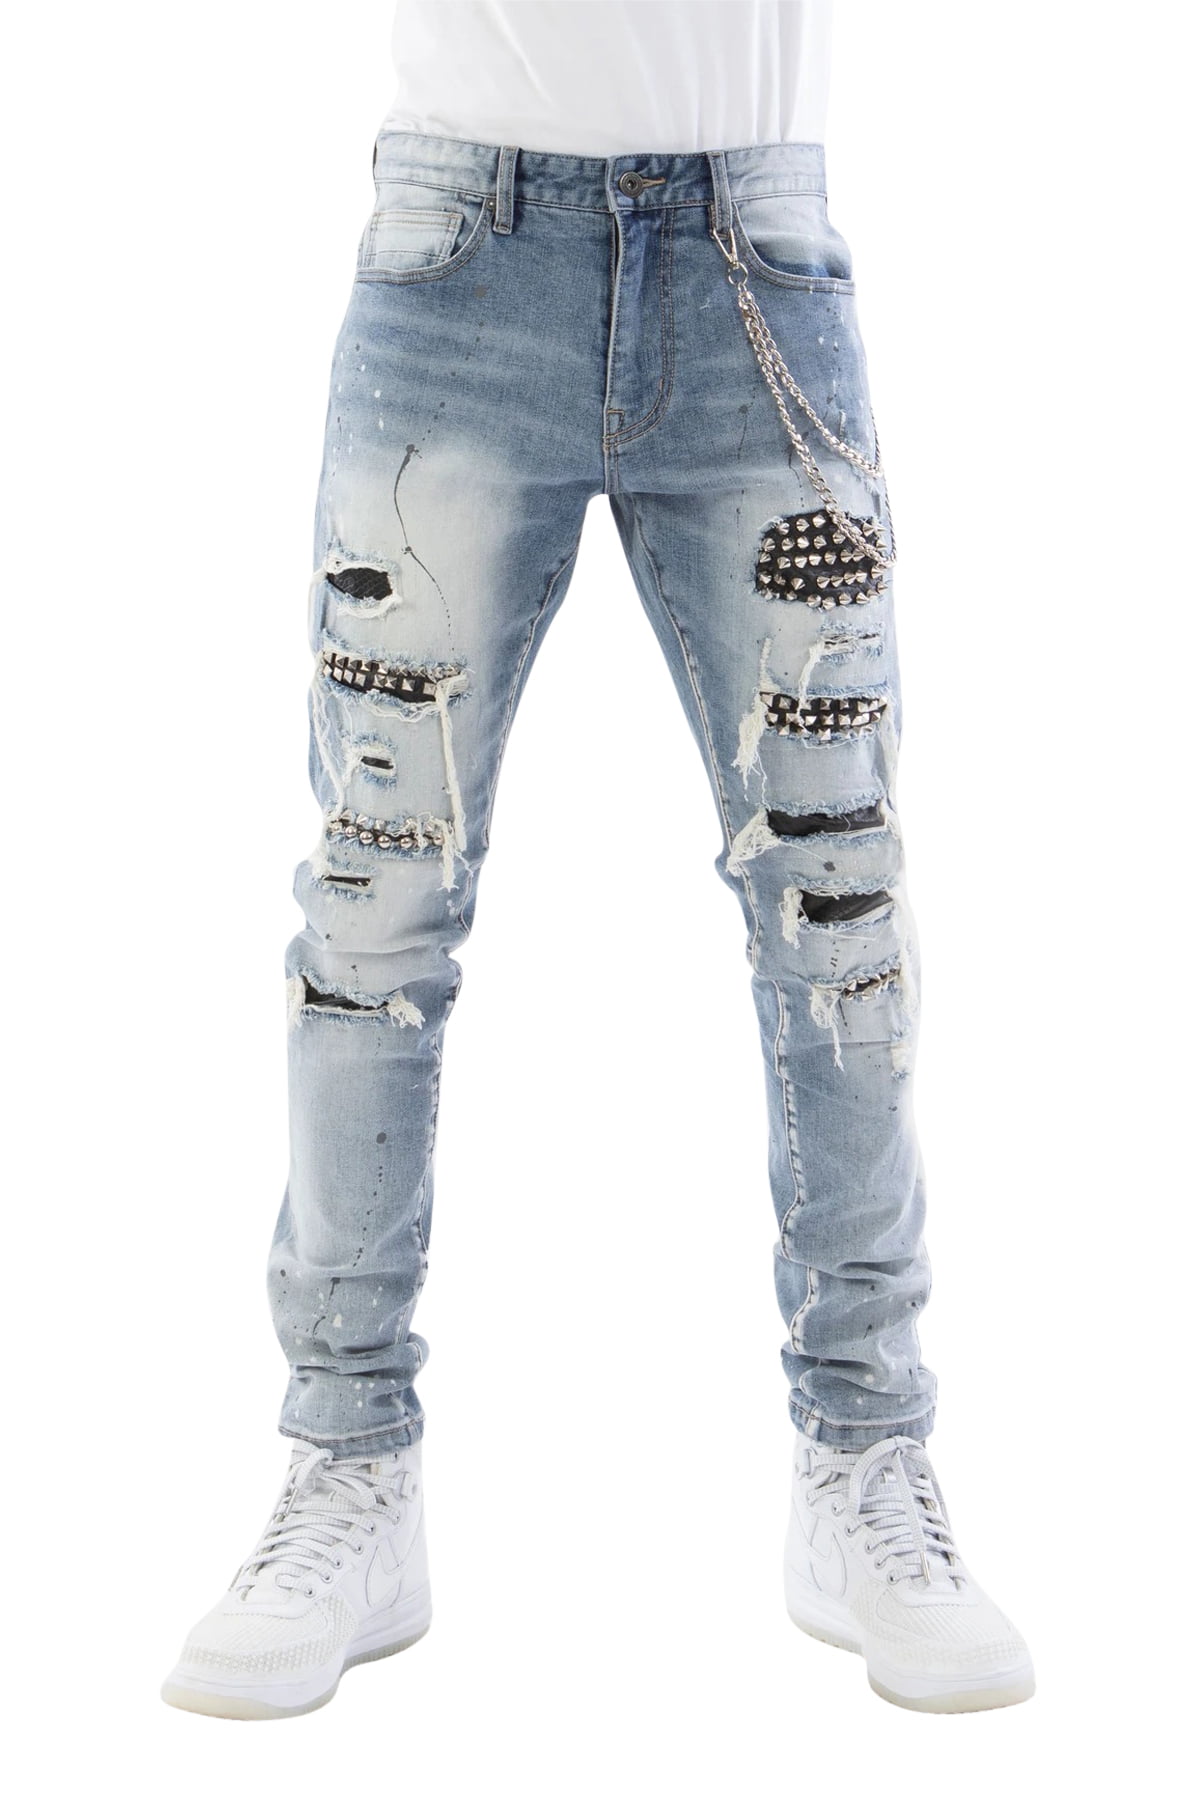 Smoke Rise Mens Studded Rockstar Denim Jeans HGHB-36*34